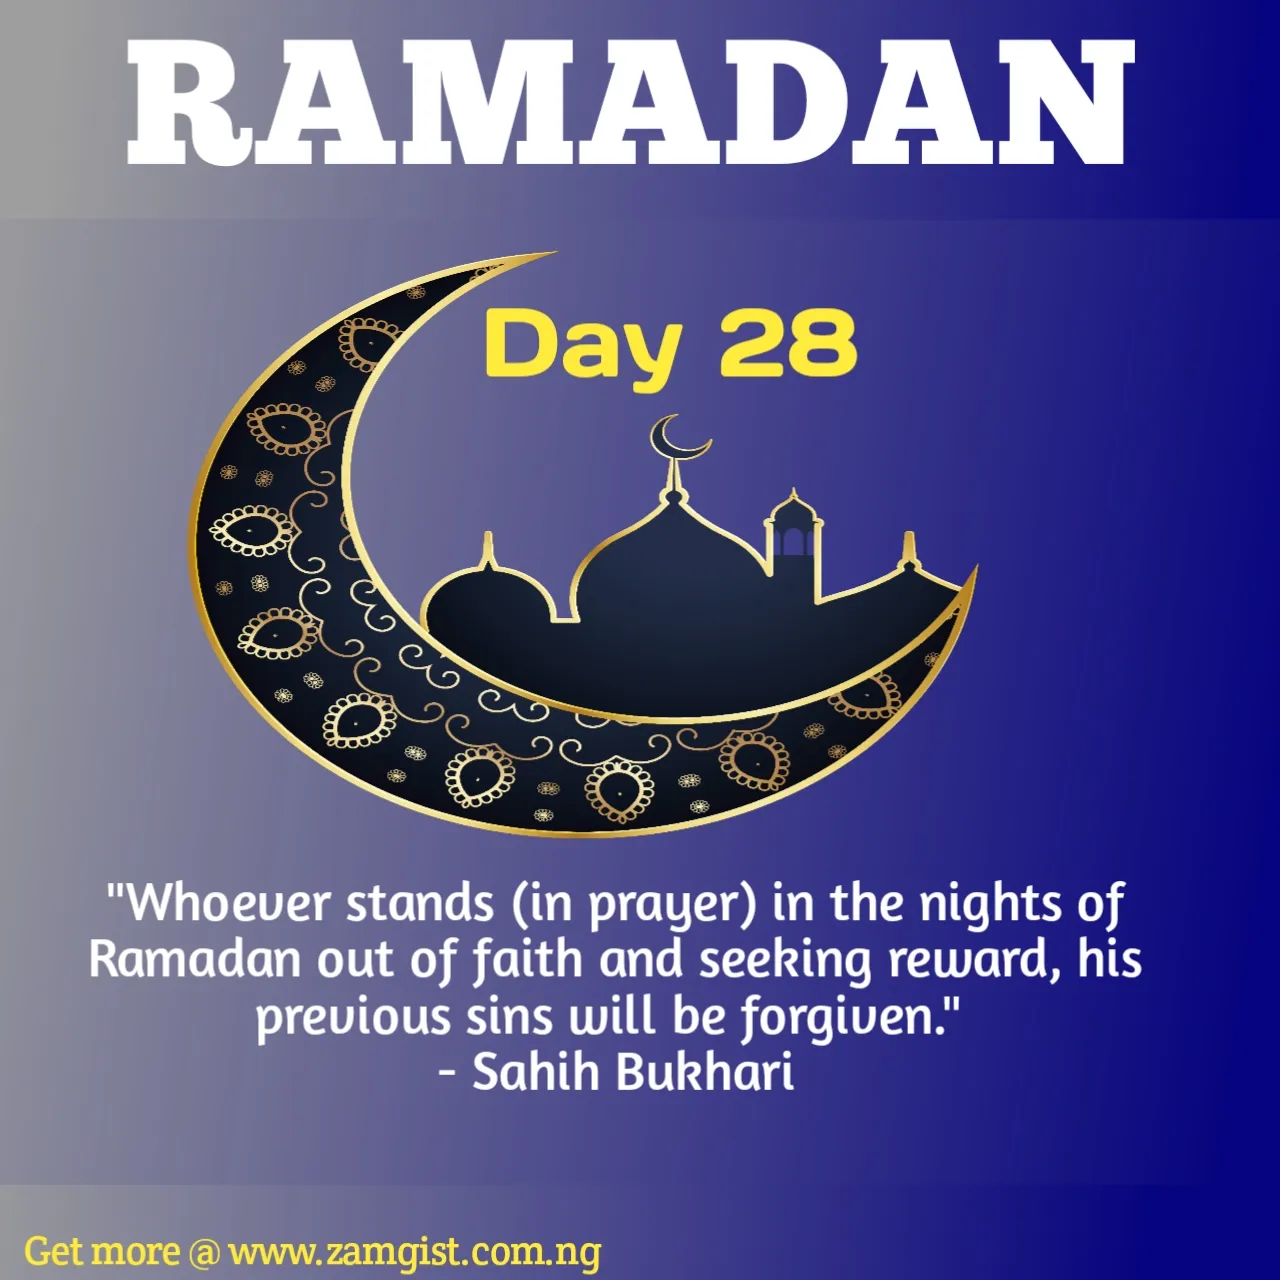 Ramadan day 28 image